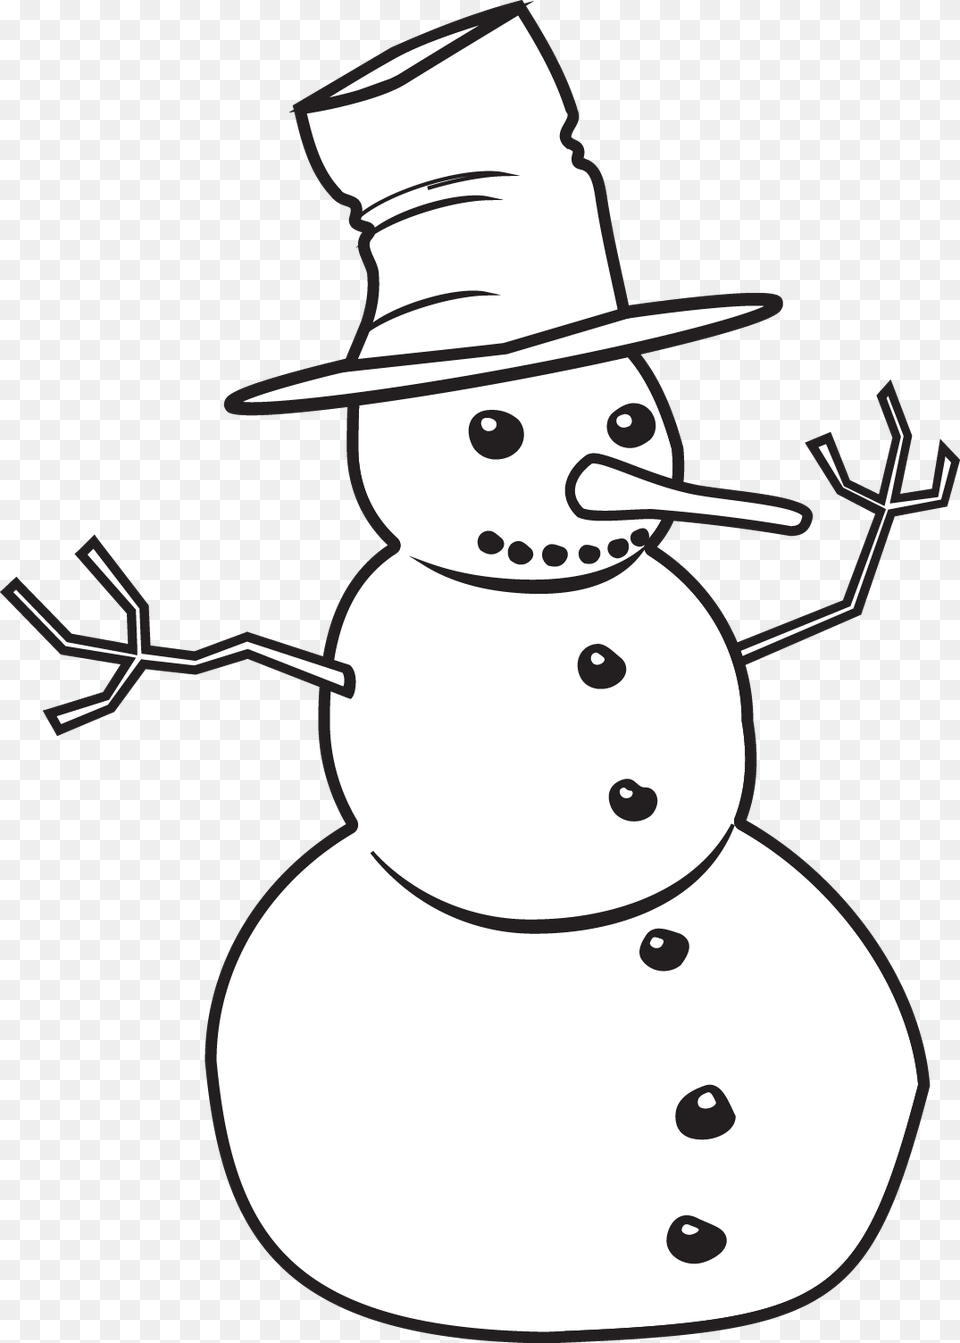 Snowman Clip Art Black And White Snowman Clip Art Black And White, Nature, Outdoors, Winter, Snow Free Png Download